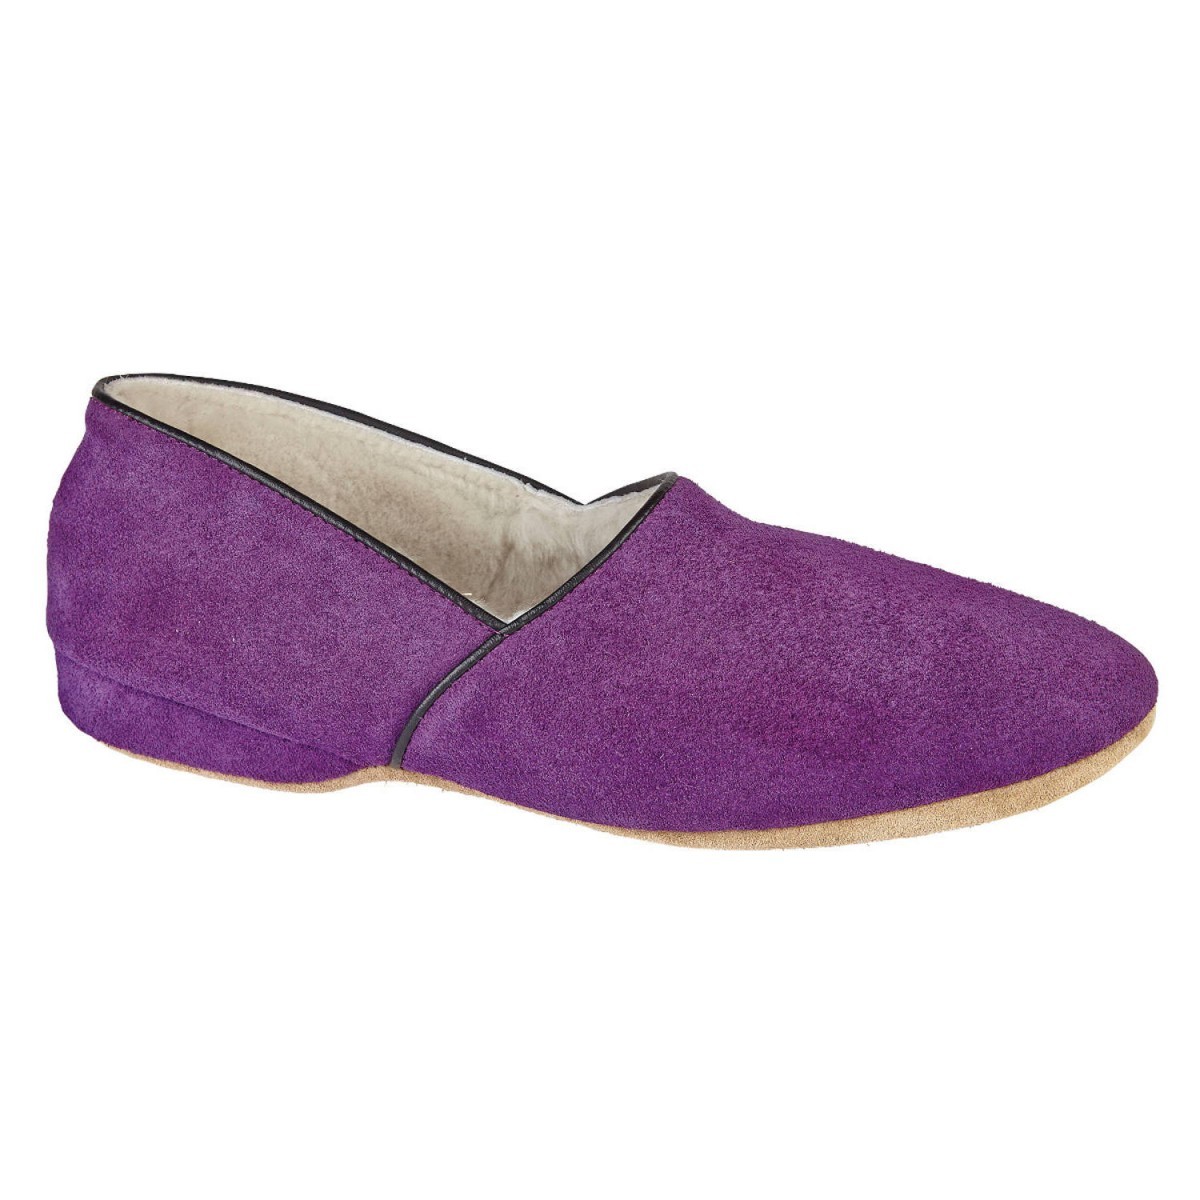 Draper of Glastonbury Anton slipper - Pediwear Footwear